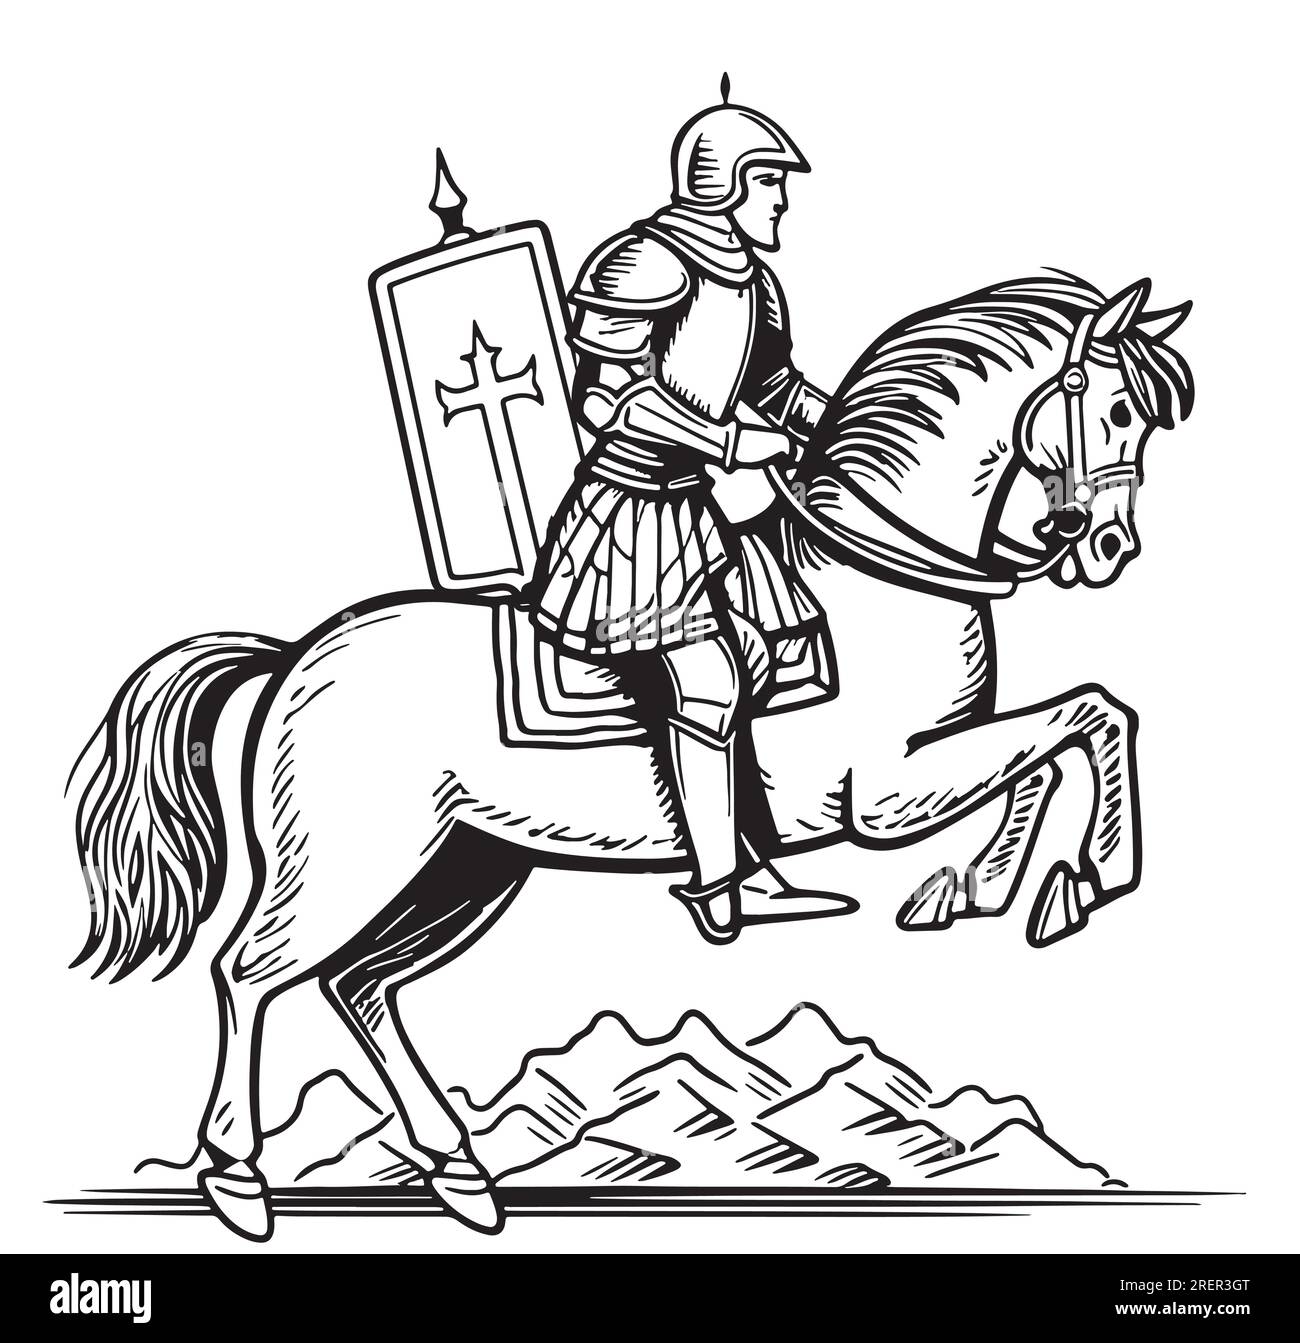 Knight on horseback sketch hand drawn heraldry illustration Stock ...